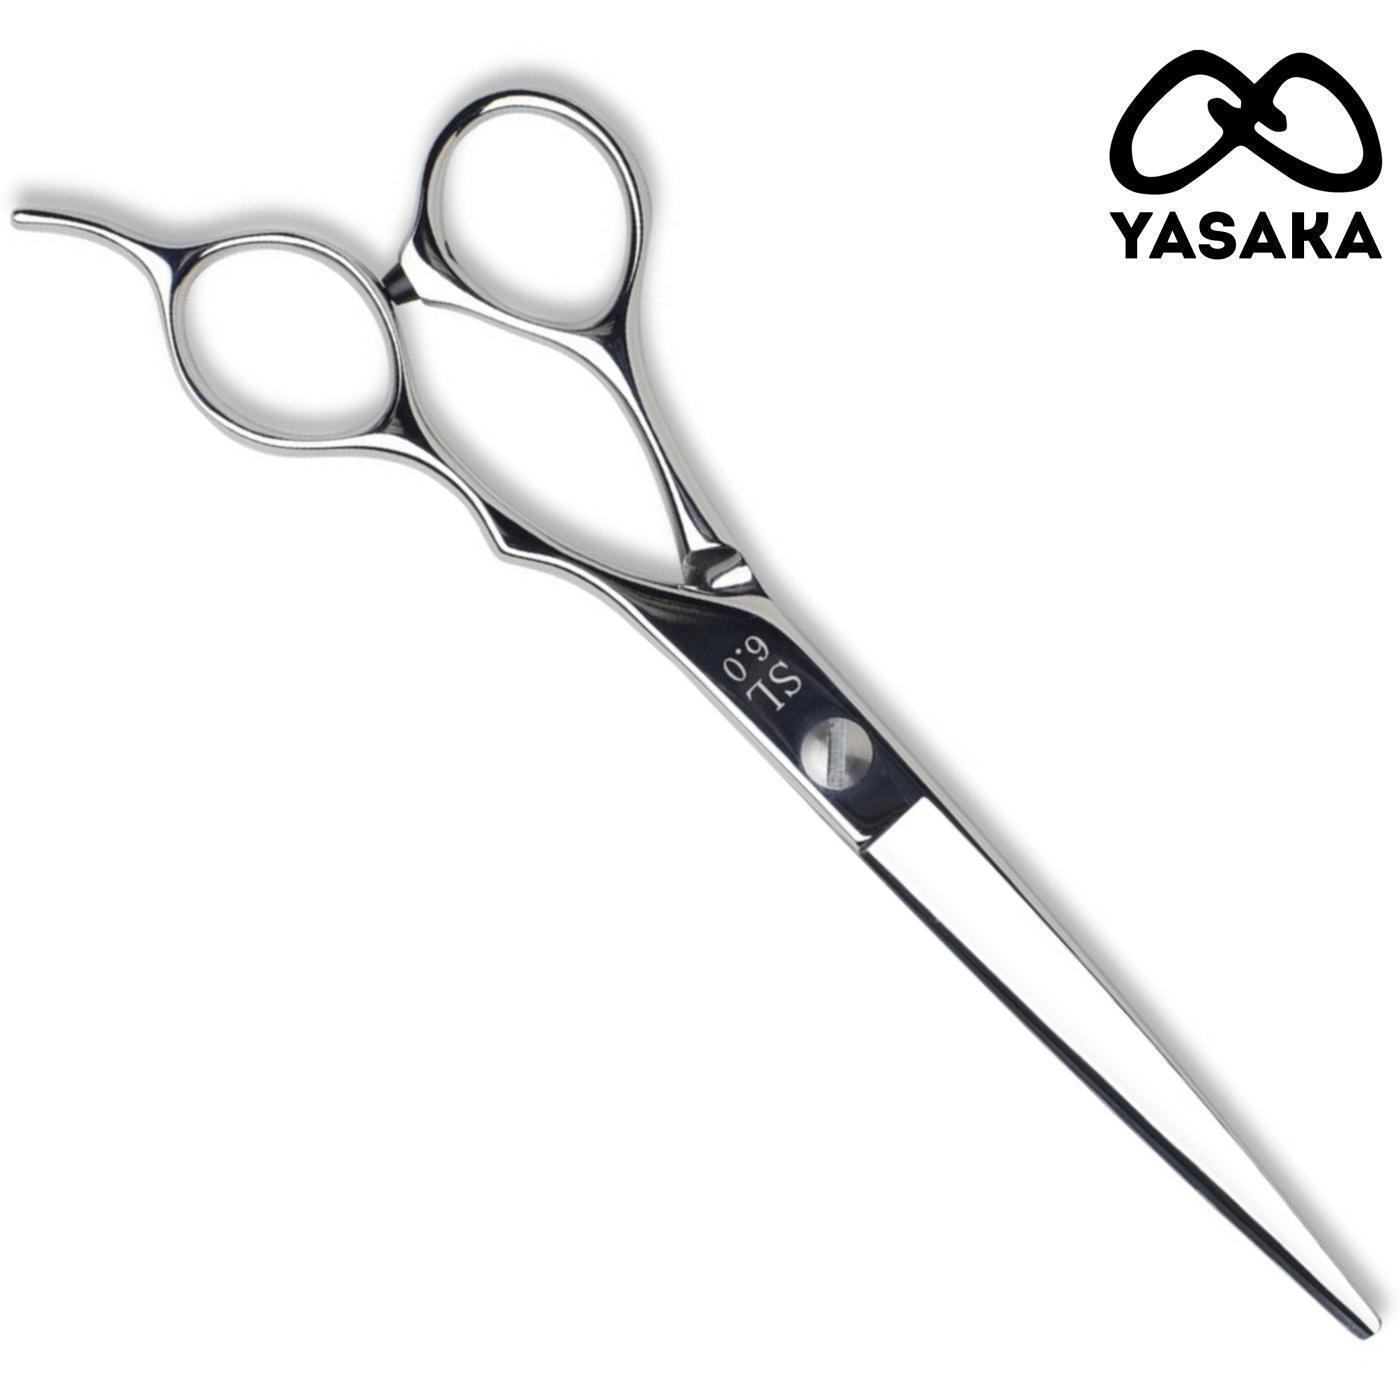 Yasaka SL Hair Cutting Scissors - Japan Scissors USA